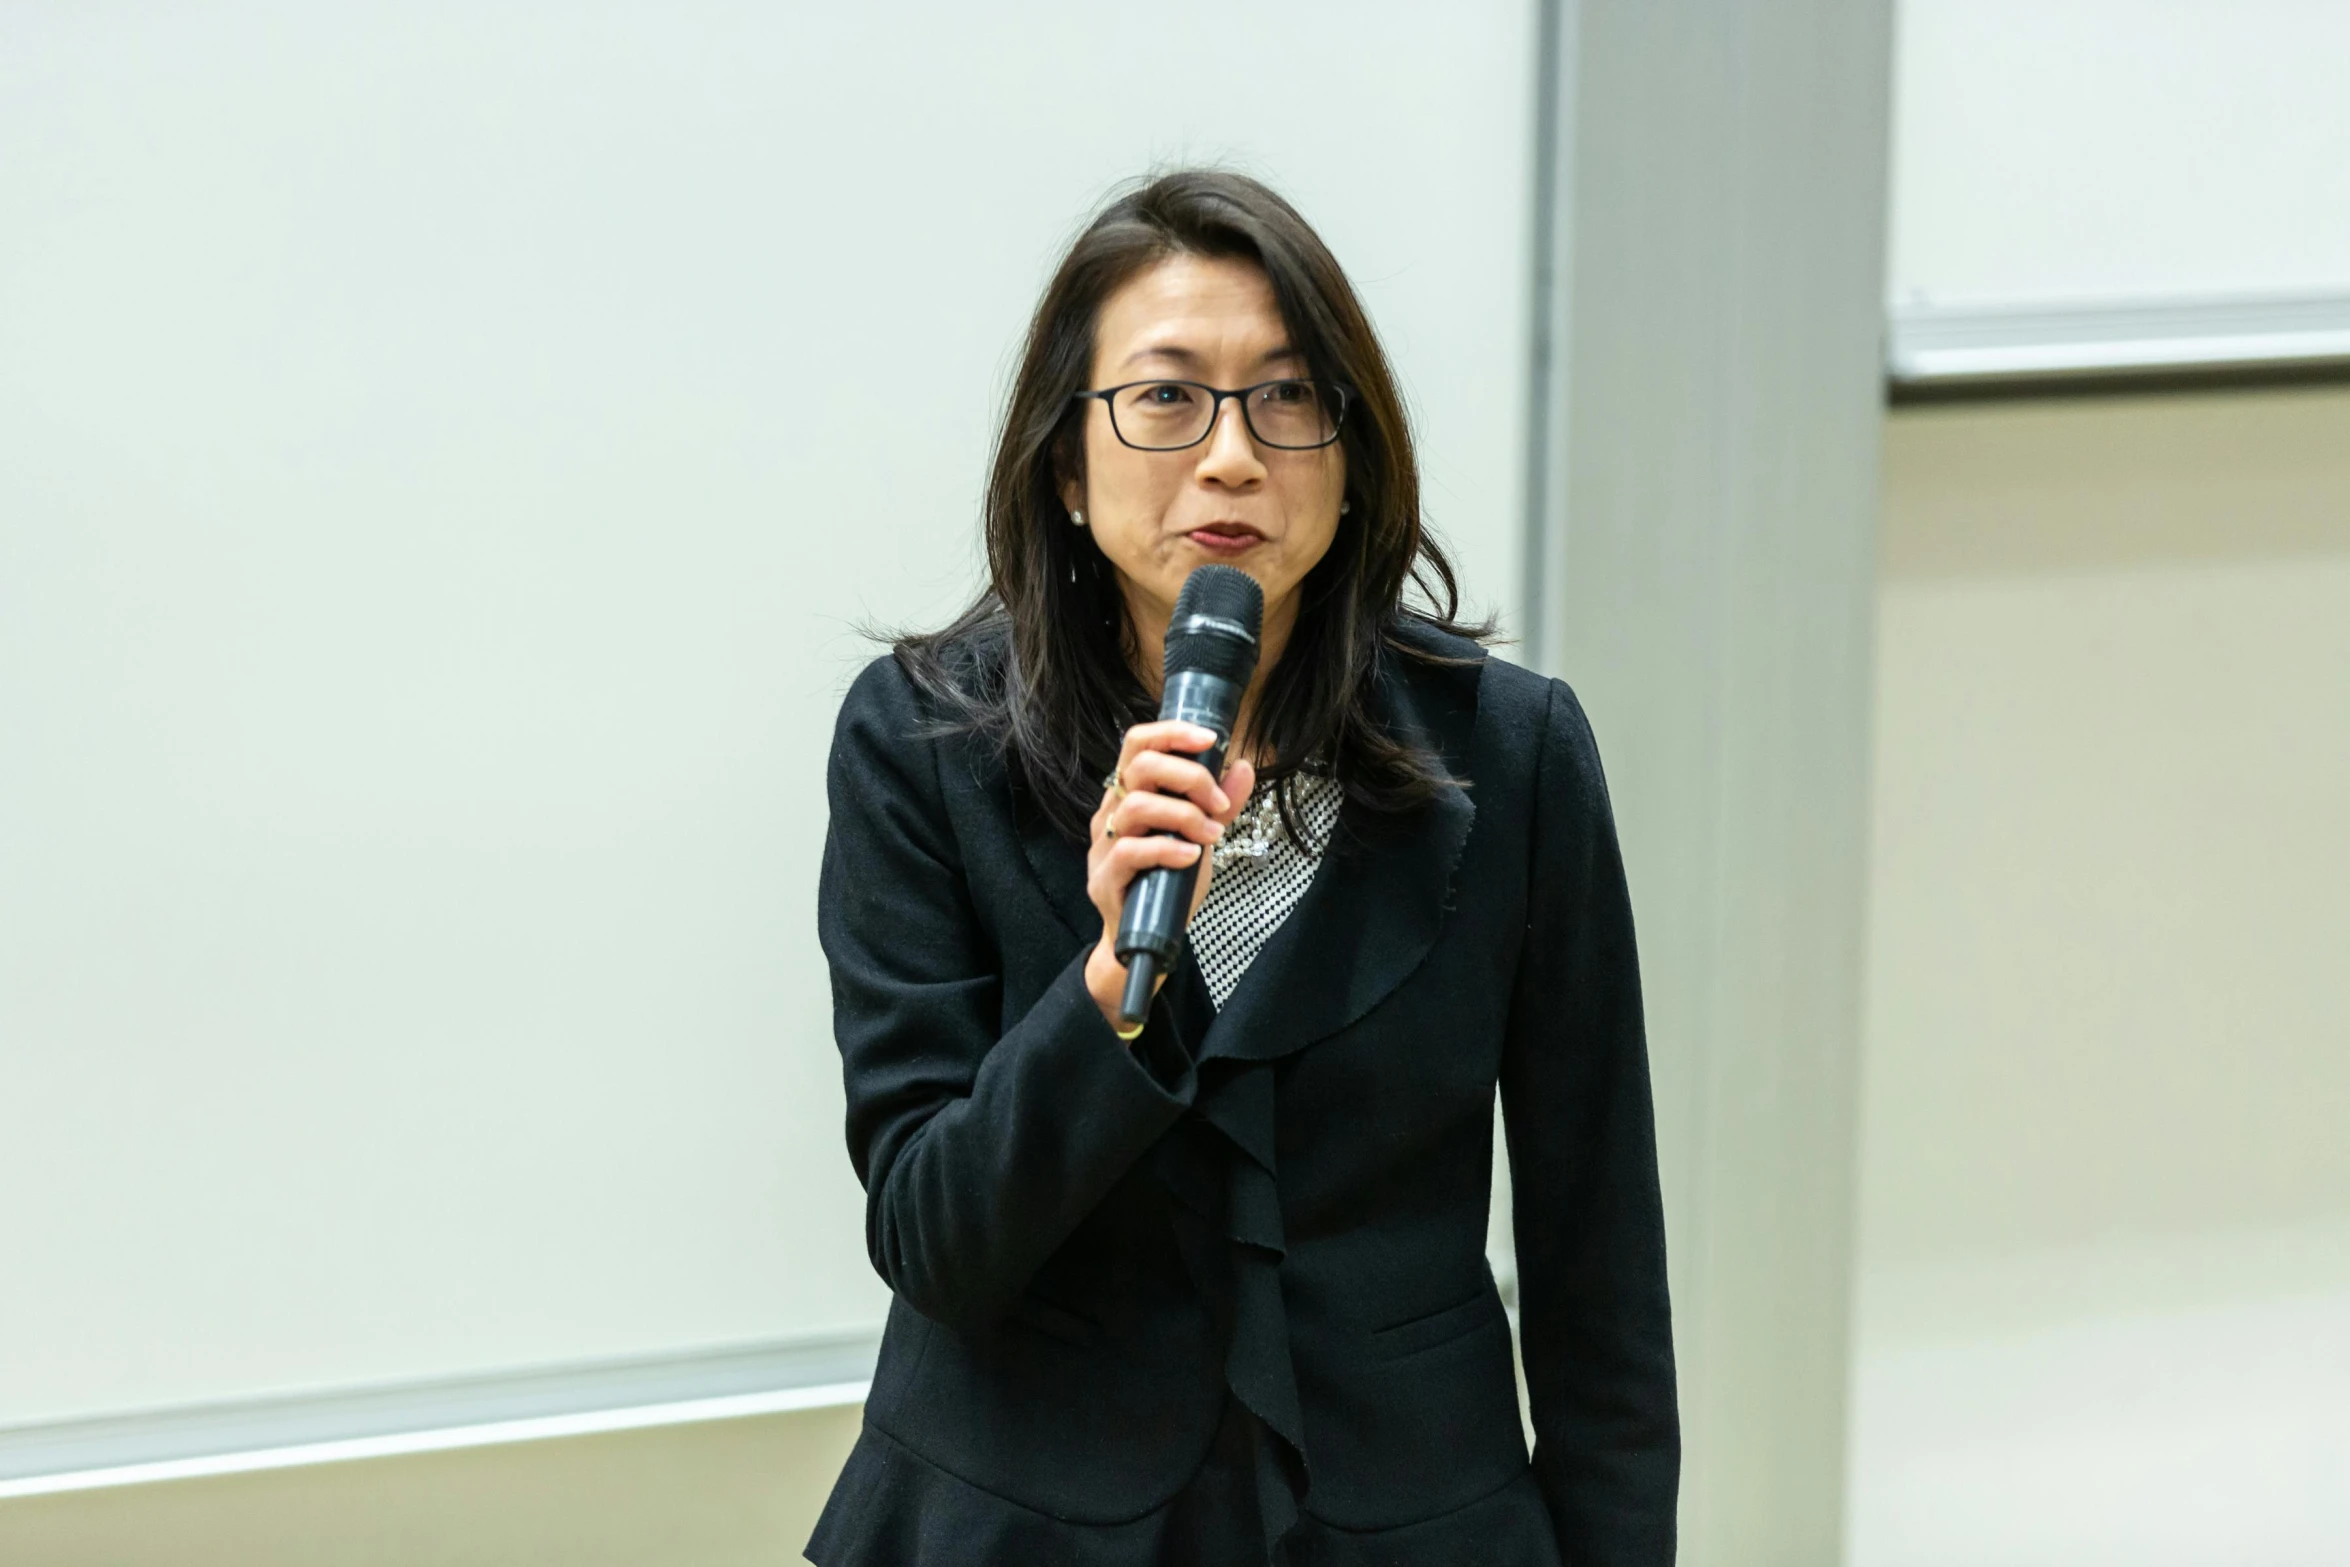 a woman in a suit speaking into a microphone, shin hanga, teaching, unblur, portrait image, keng lye